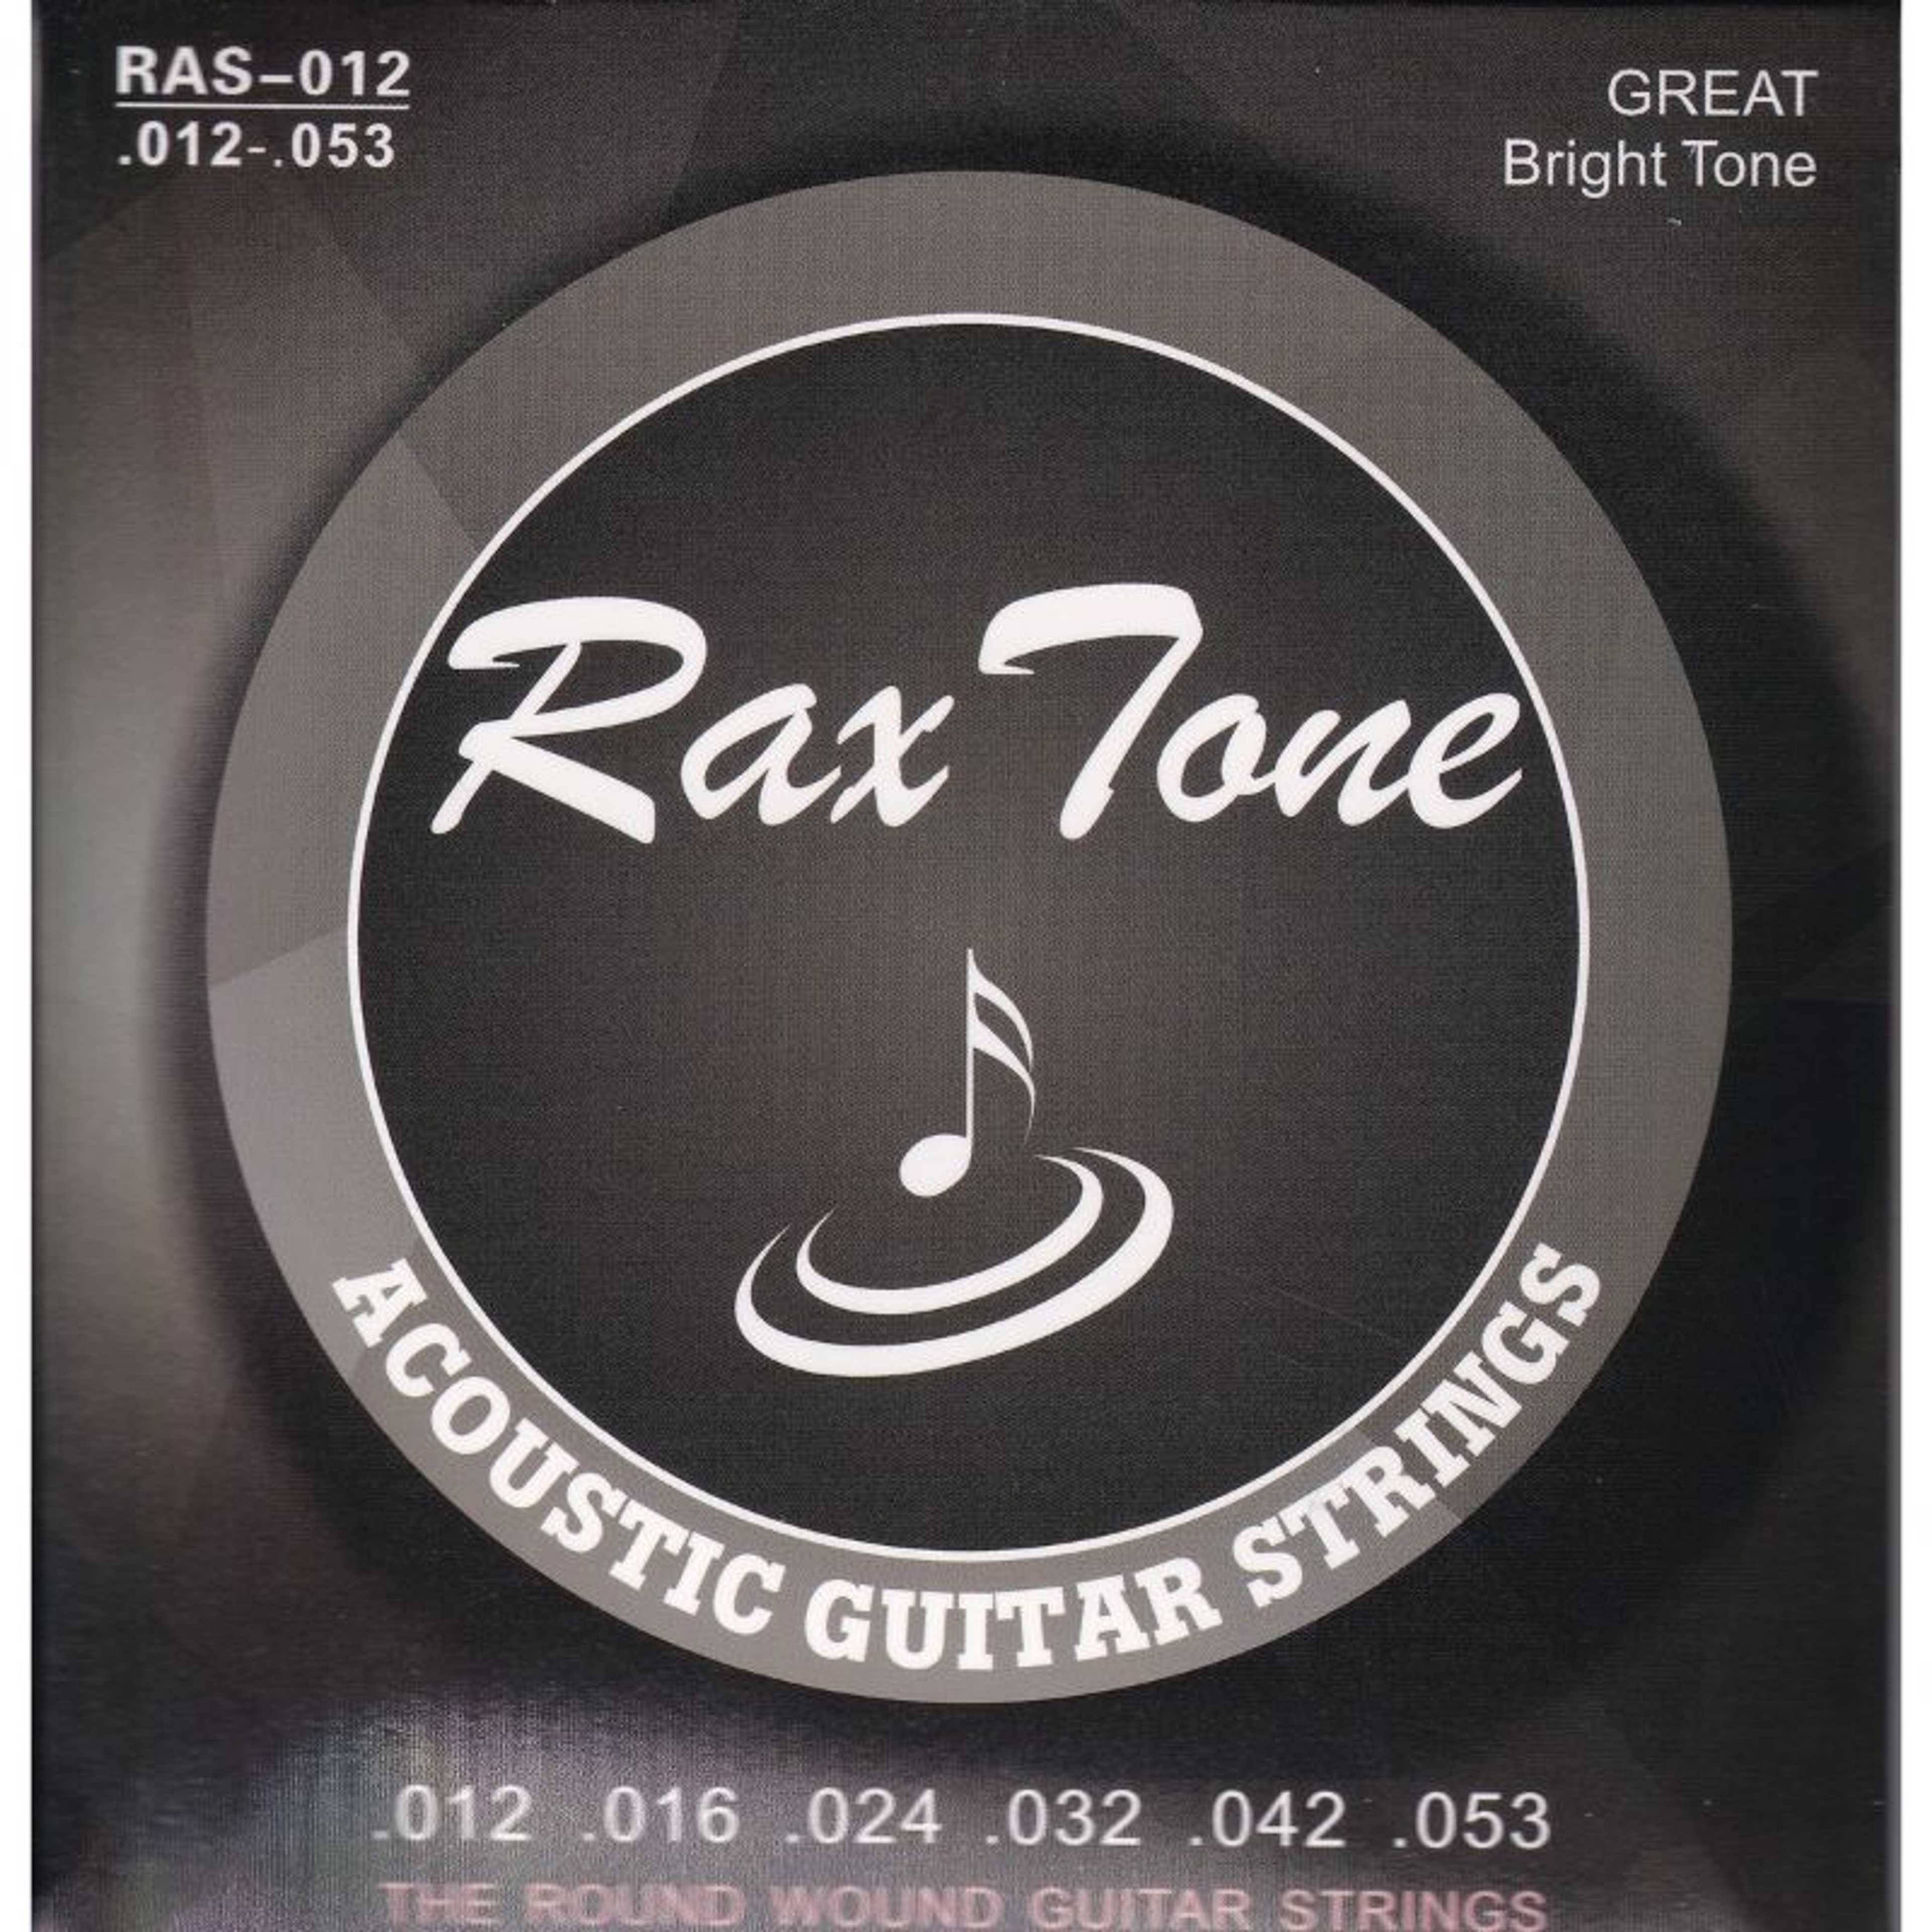 RaxTone Acoustic Guitar Strings,6 Strings/Set,Light.012-.053,Anti-Rust Coating